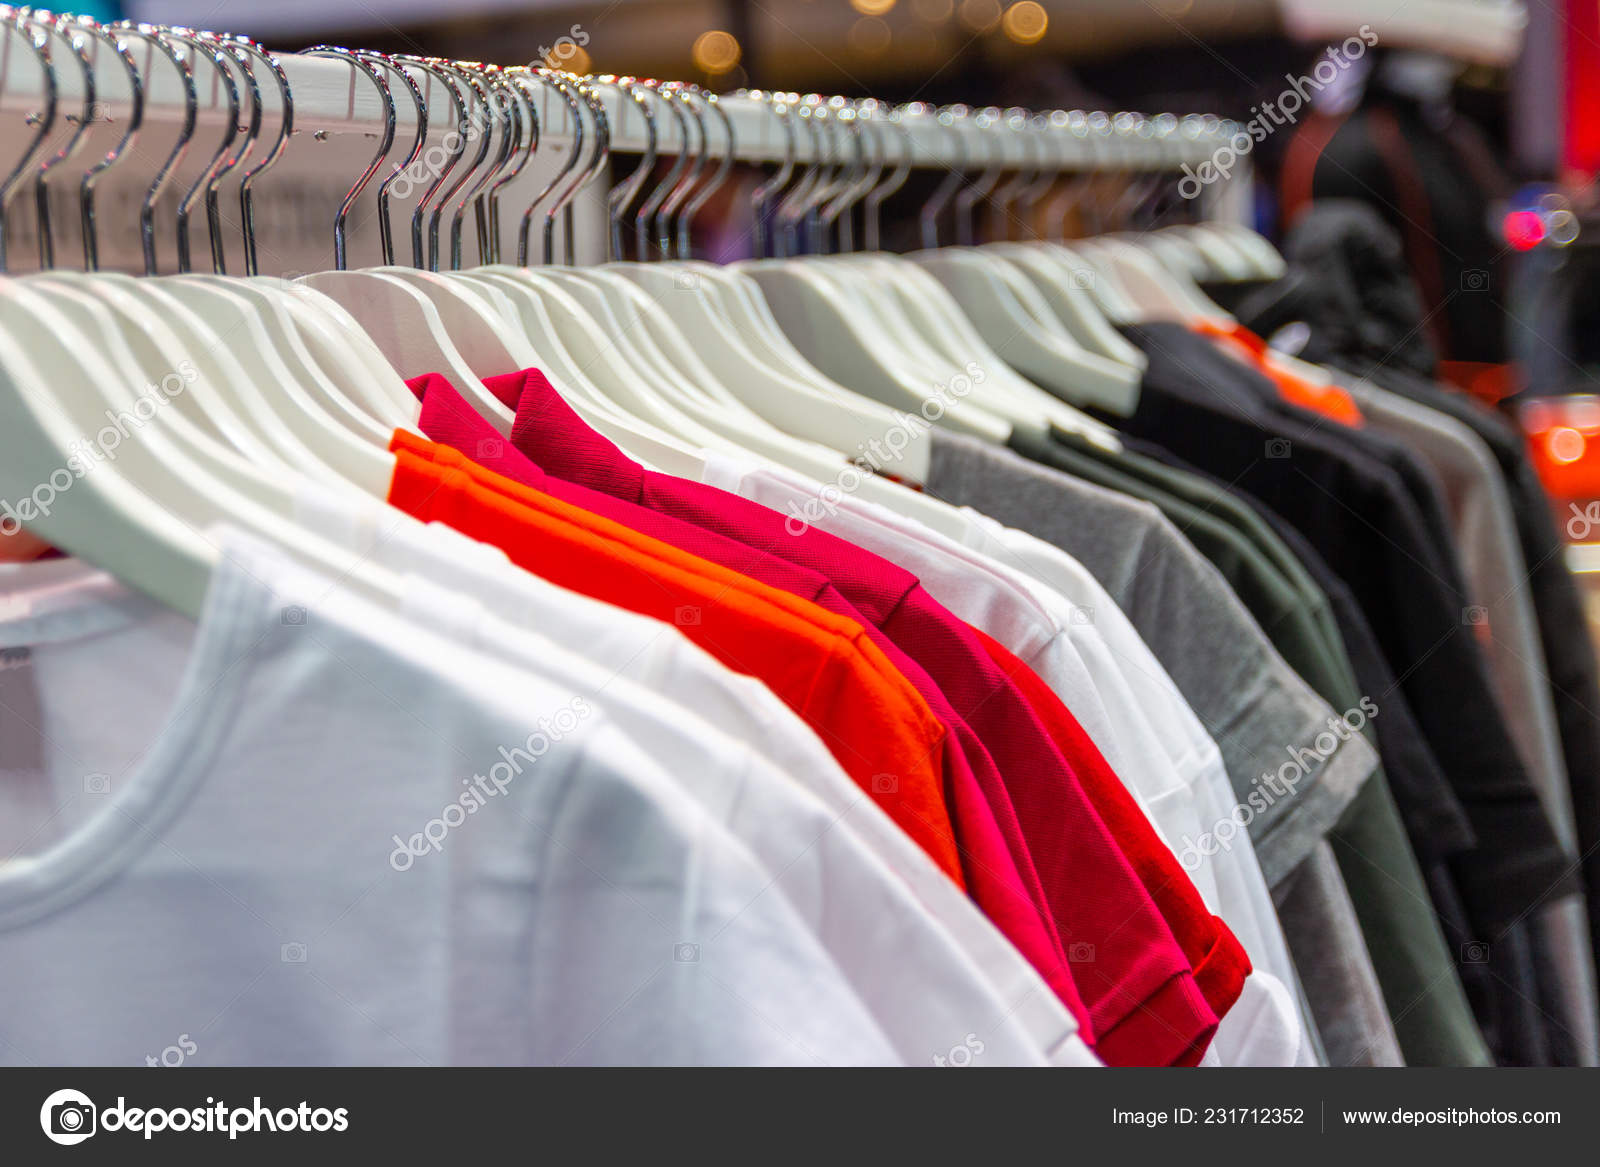 https://st4.depositphotos.com/14709026/23171/i/1600/depositphotos_231712352-stock-photo-colorful-shirt-hangers-sale-department.jpg